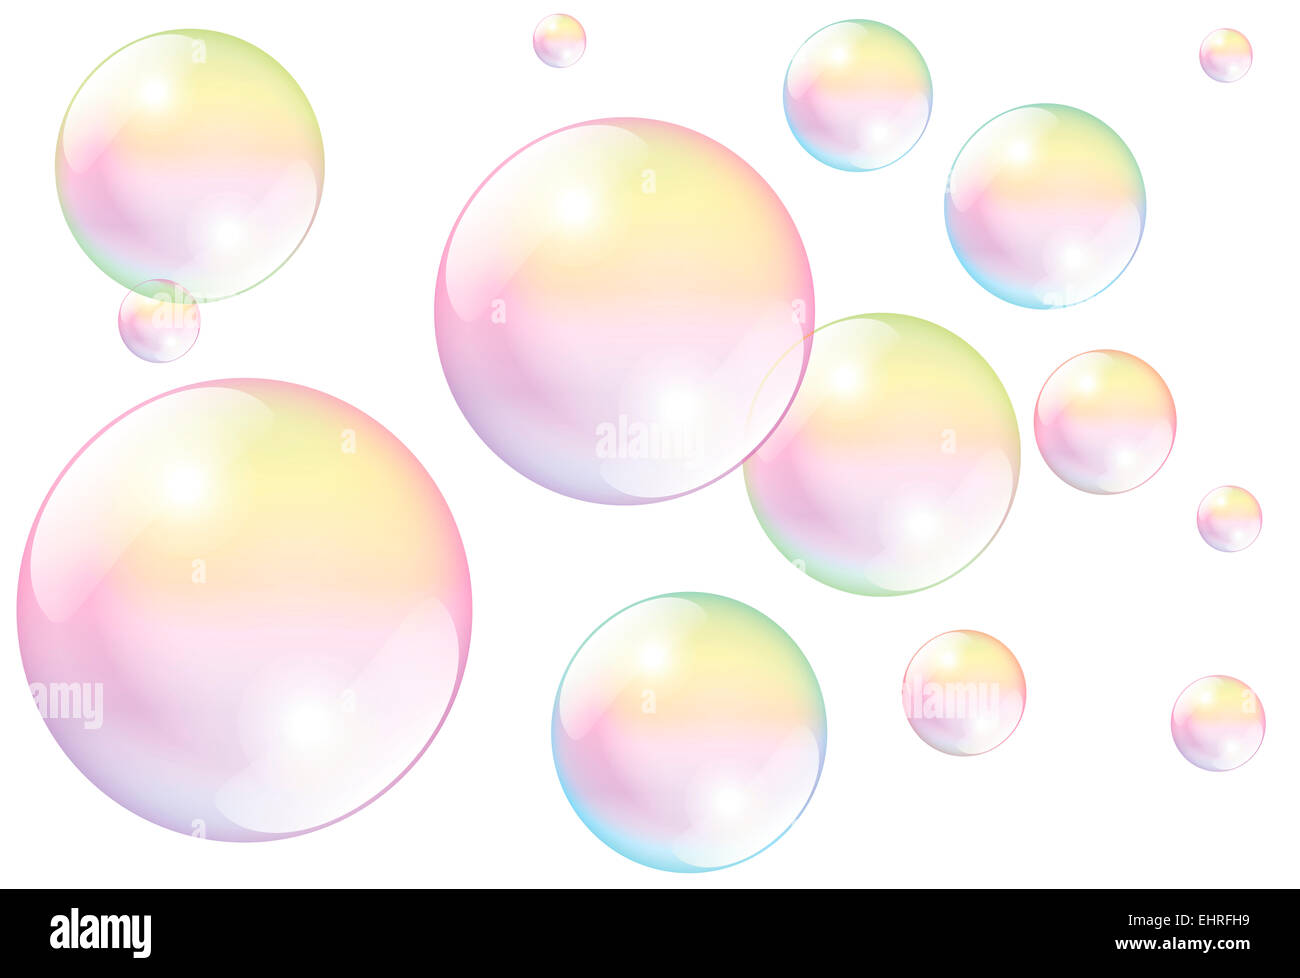 Soap bubbles on white background. Stock Photo